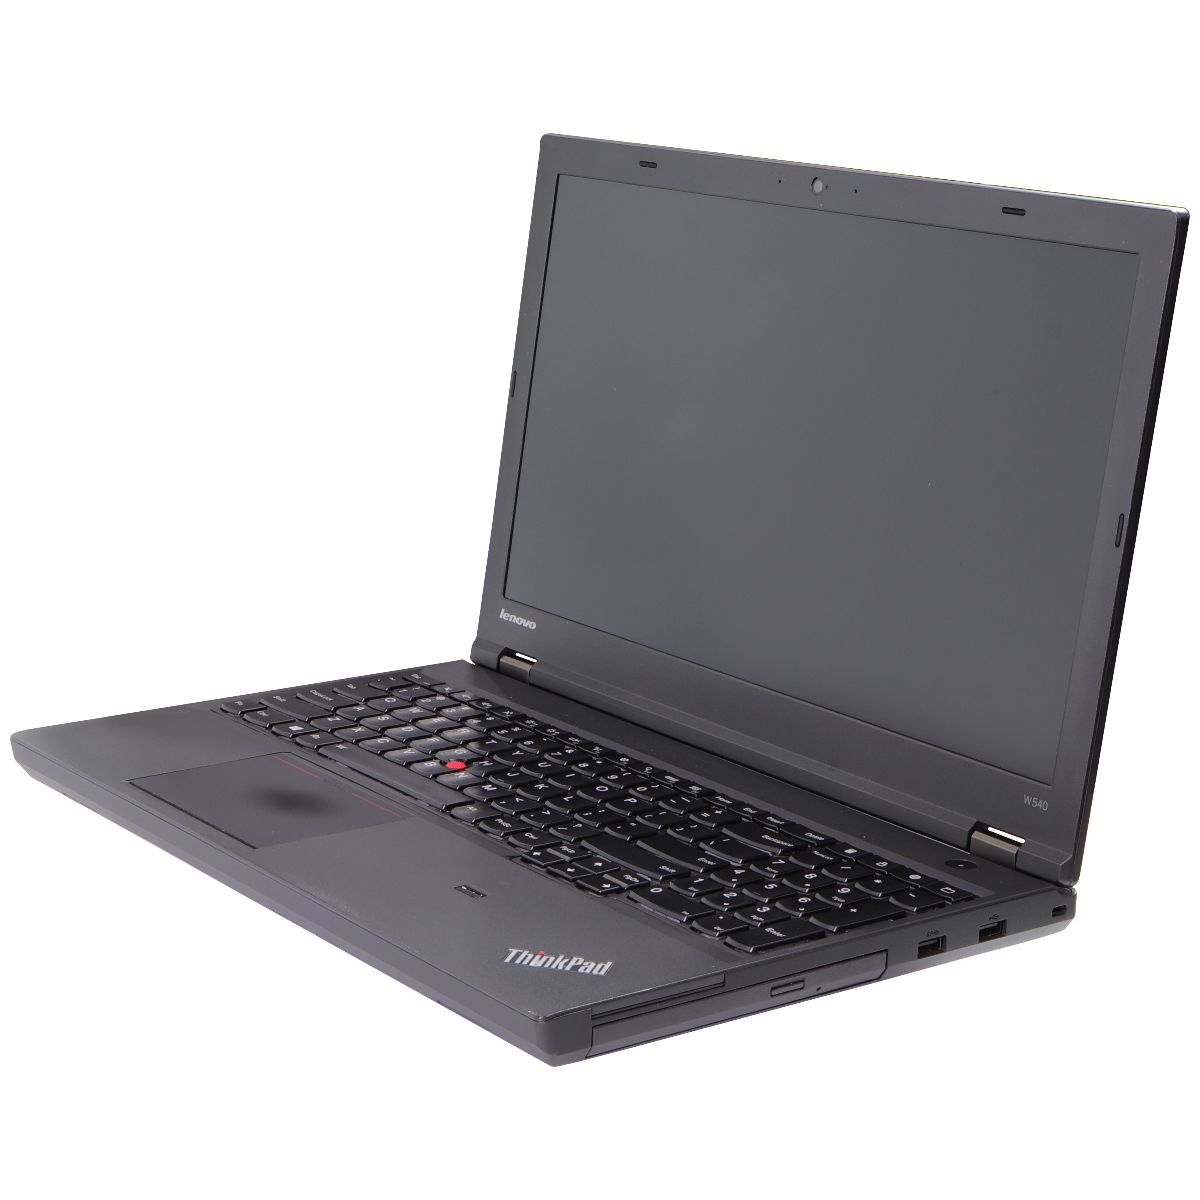 Lenovo ThinkPad W540 15.6-in FHD Laptop i7-4800MQ/256GB SSD/16GB/10 Home